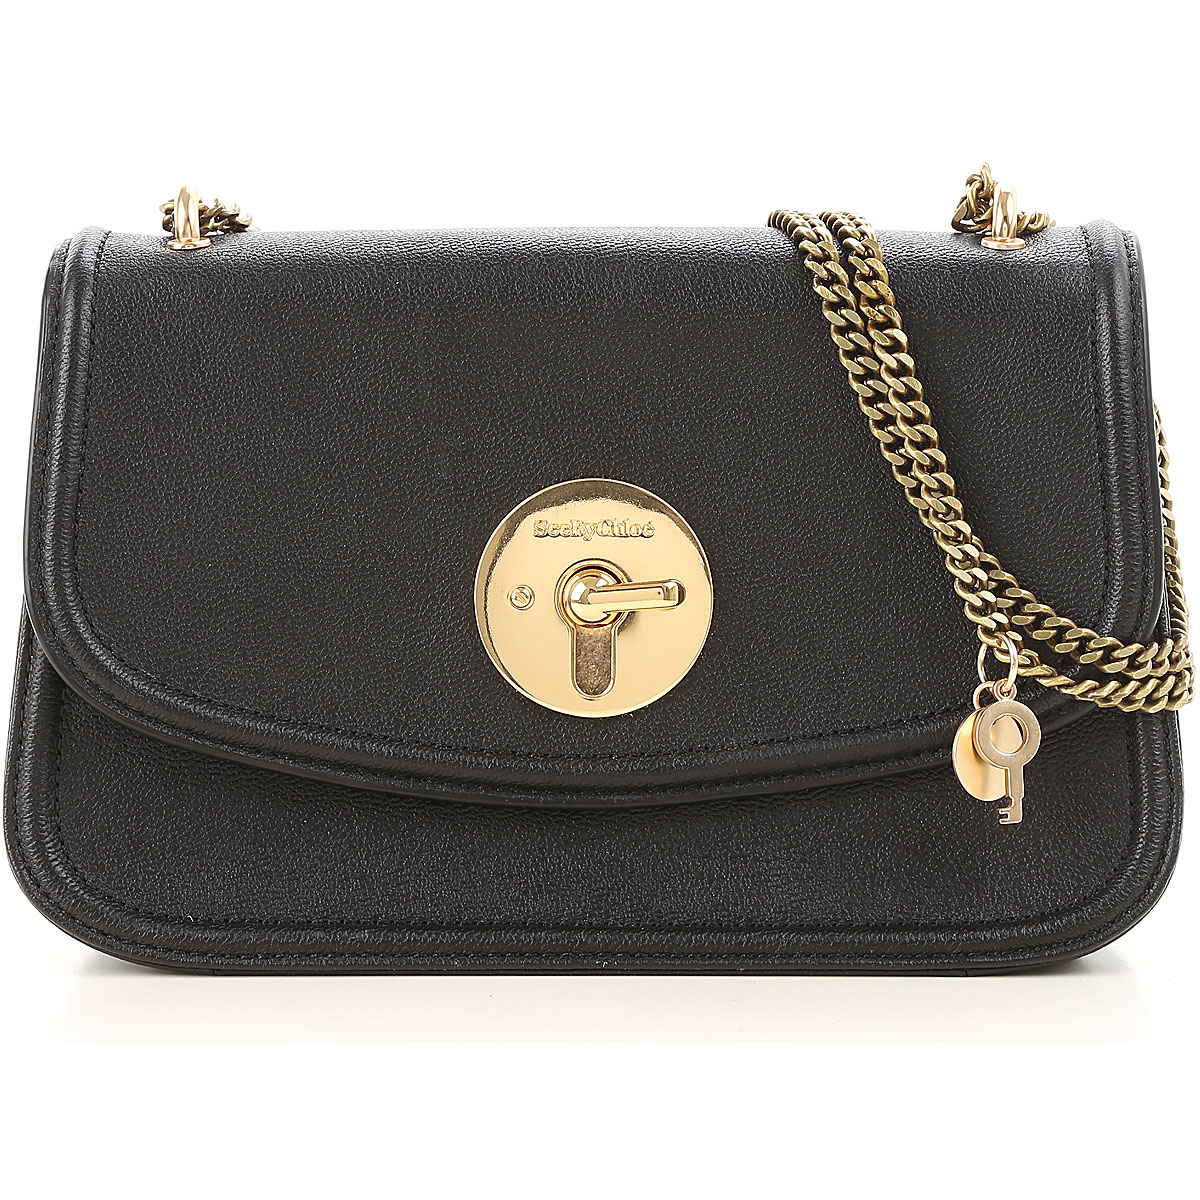 Handbags See By Chloe, Style code: chs18as872388001-001-